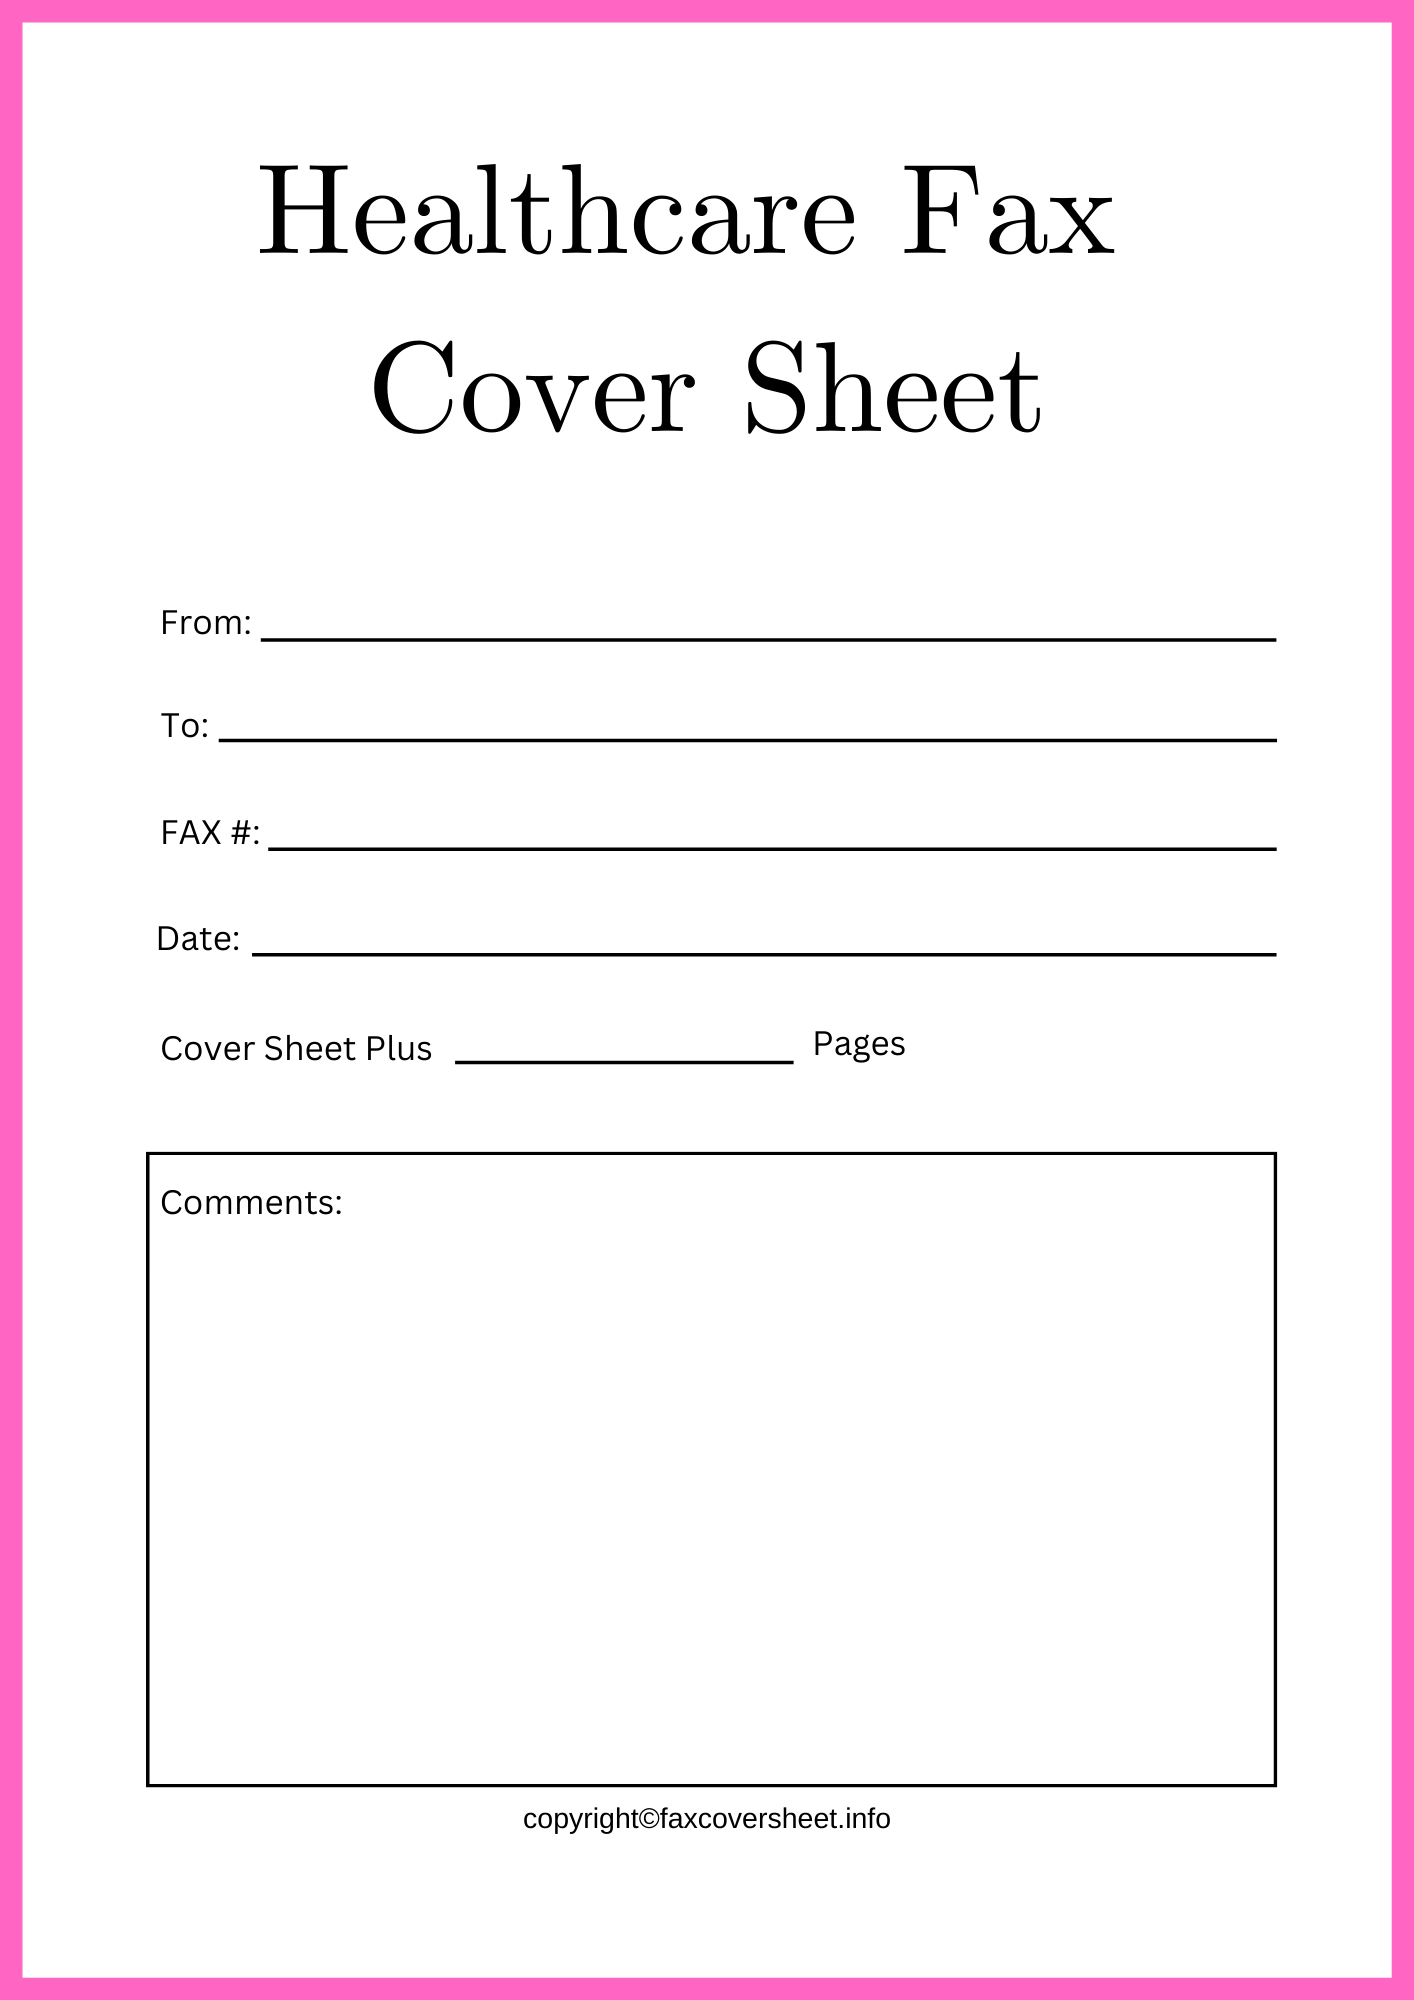 Healthcare Fax Cover Sheet